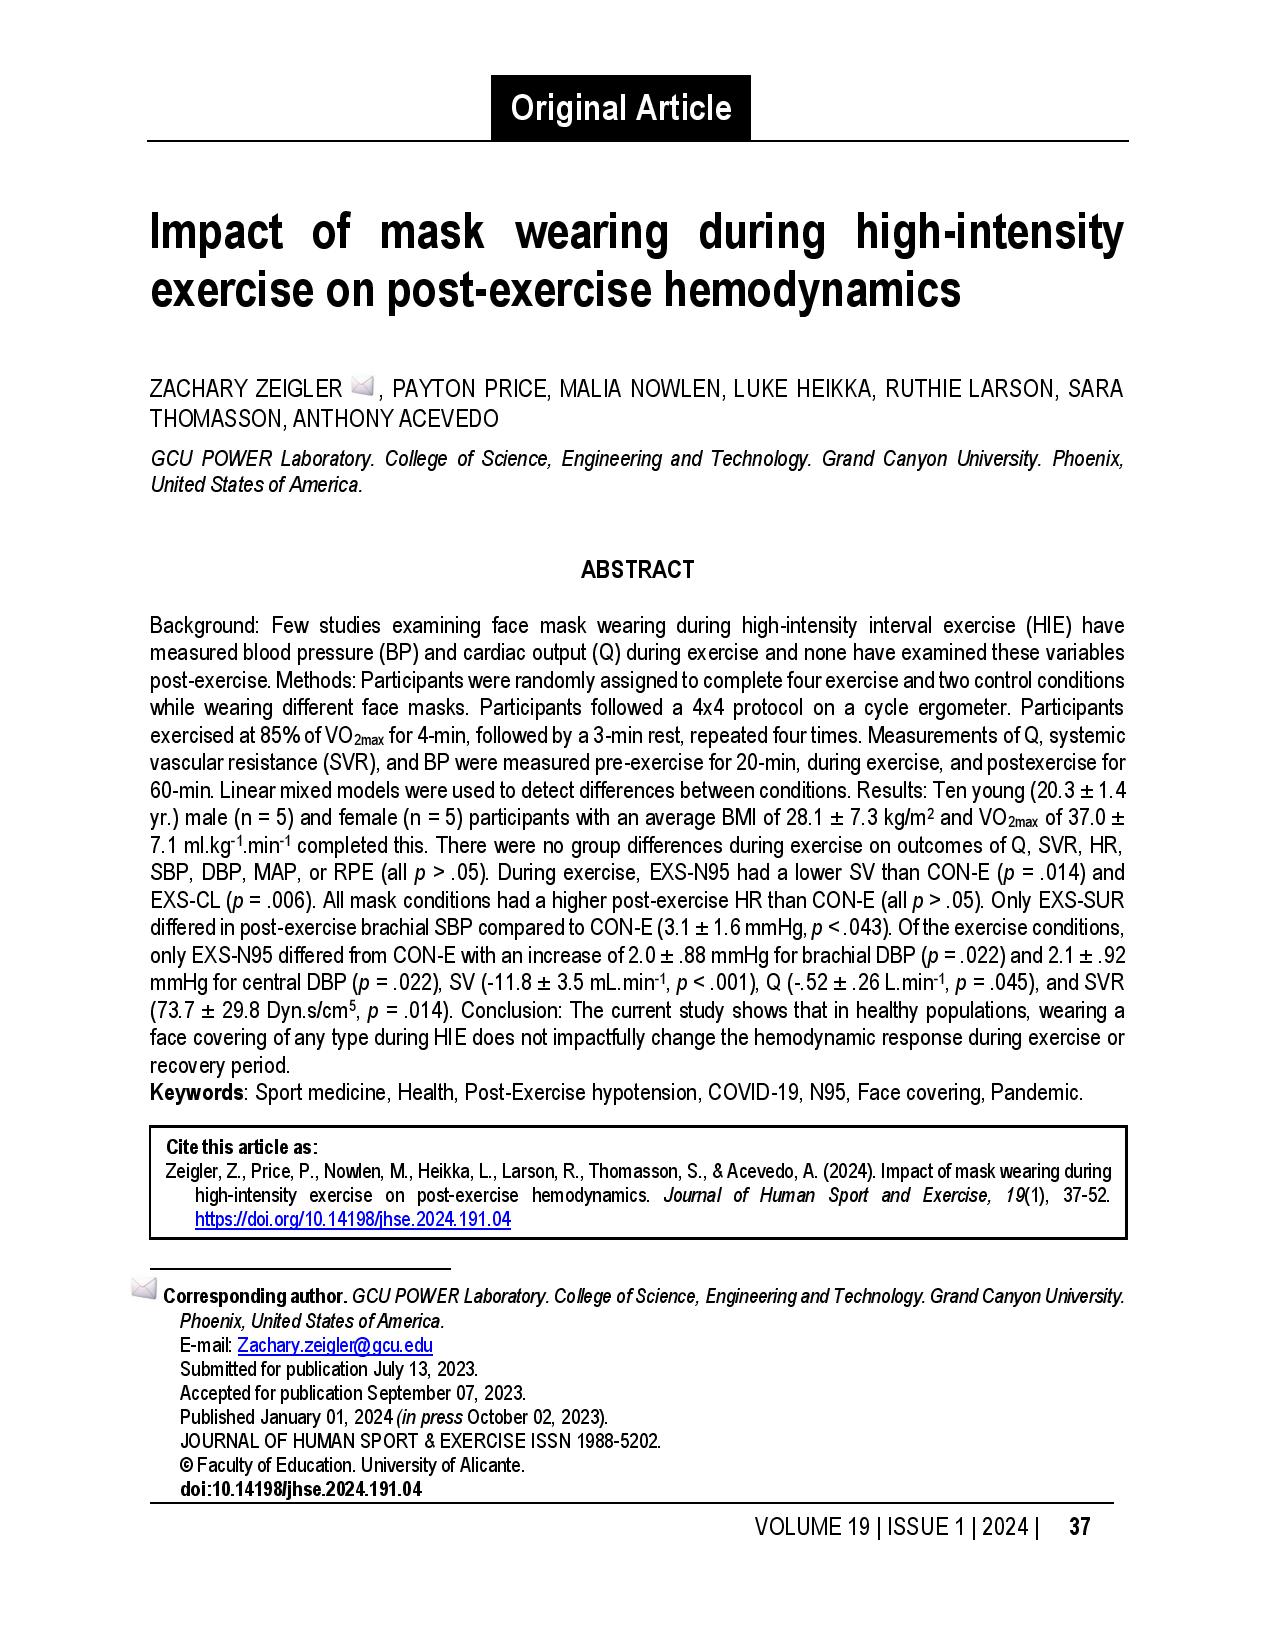 Impact of mask wearing during high-intensity exercise on post-exercise hemodynamics